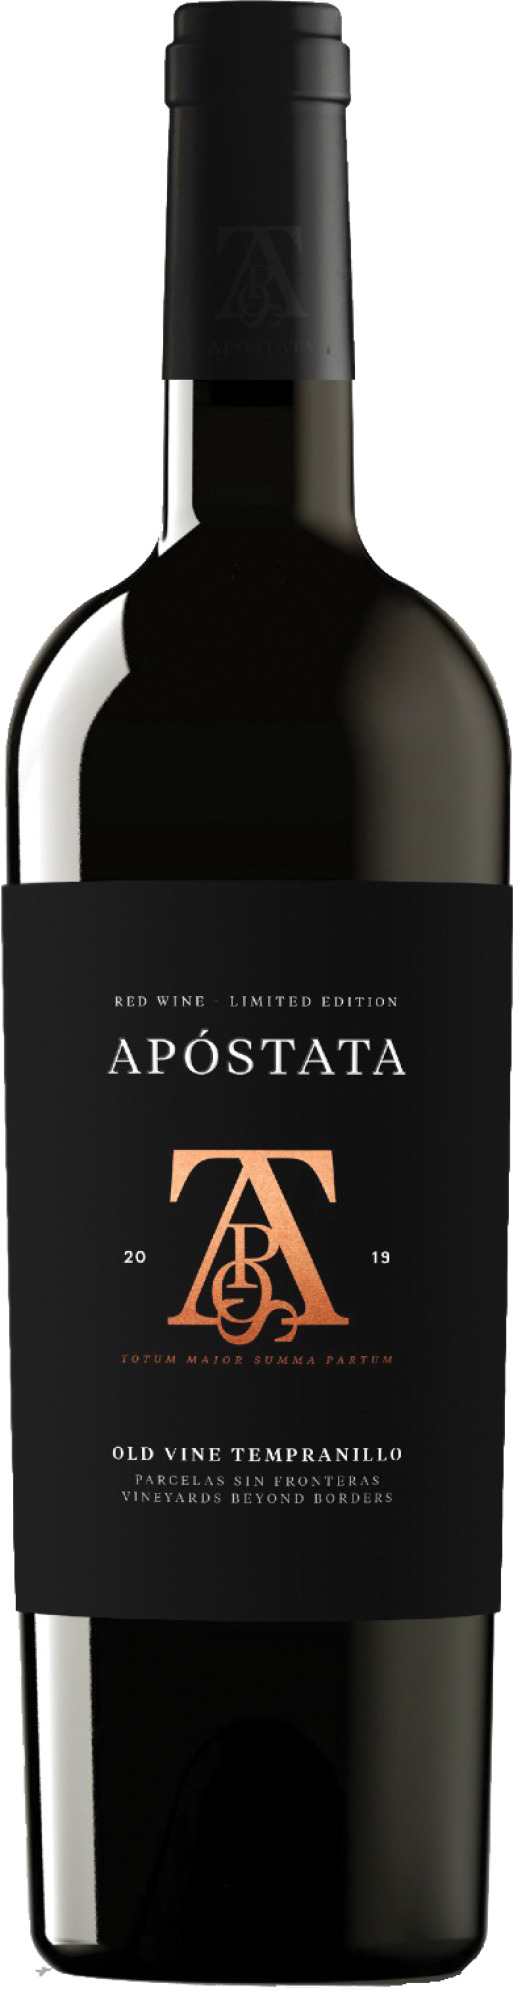 Apóstata Limited Edition Tinto Old Vine Tempranillo VdM